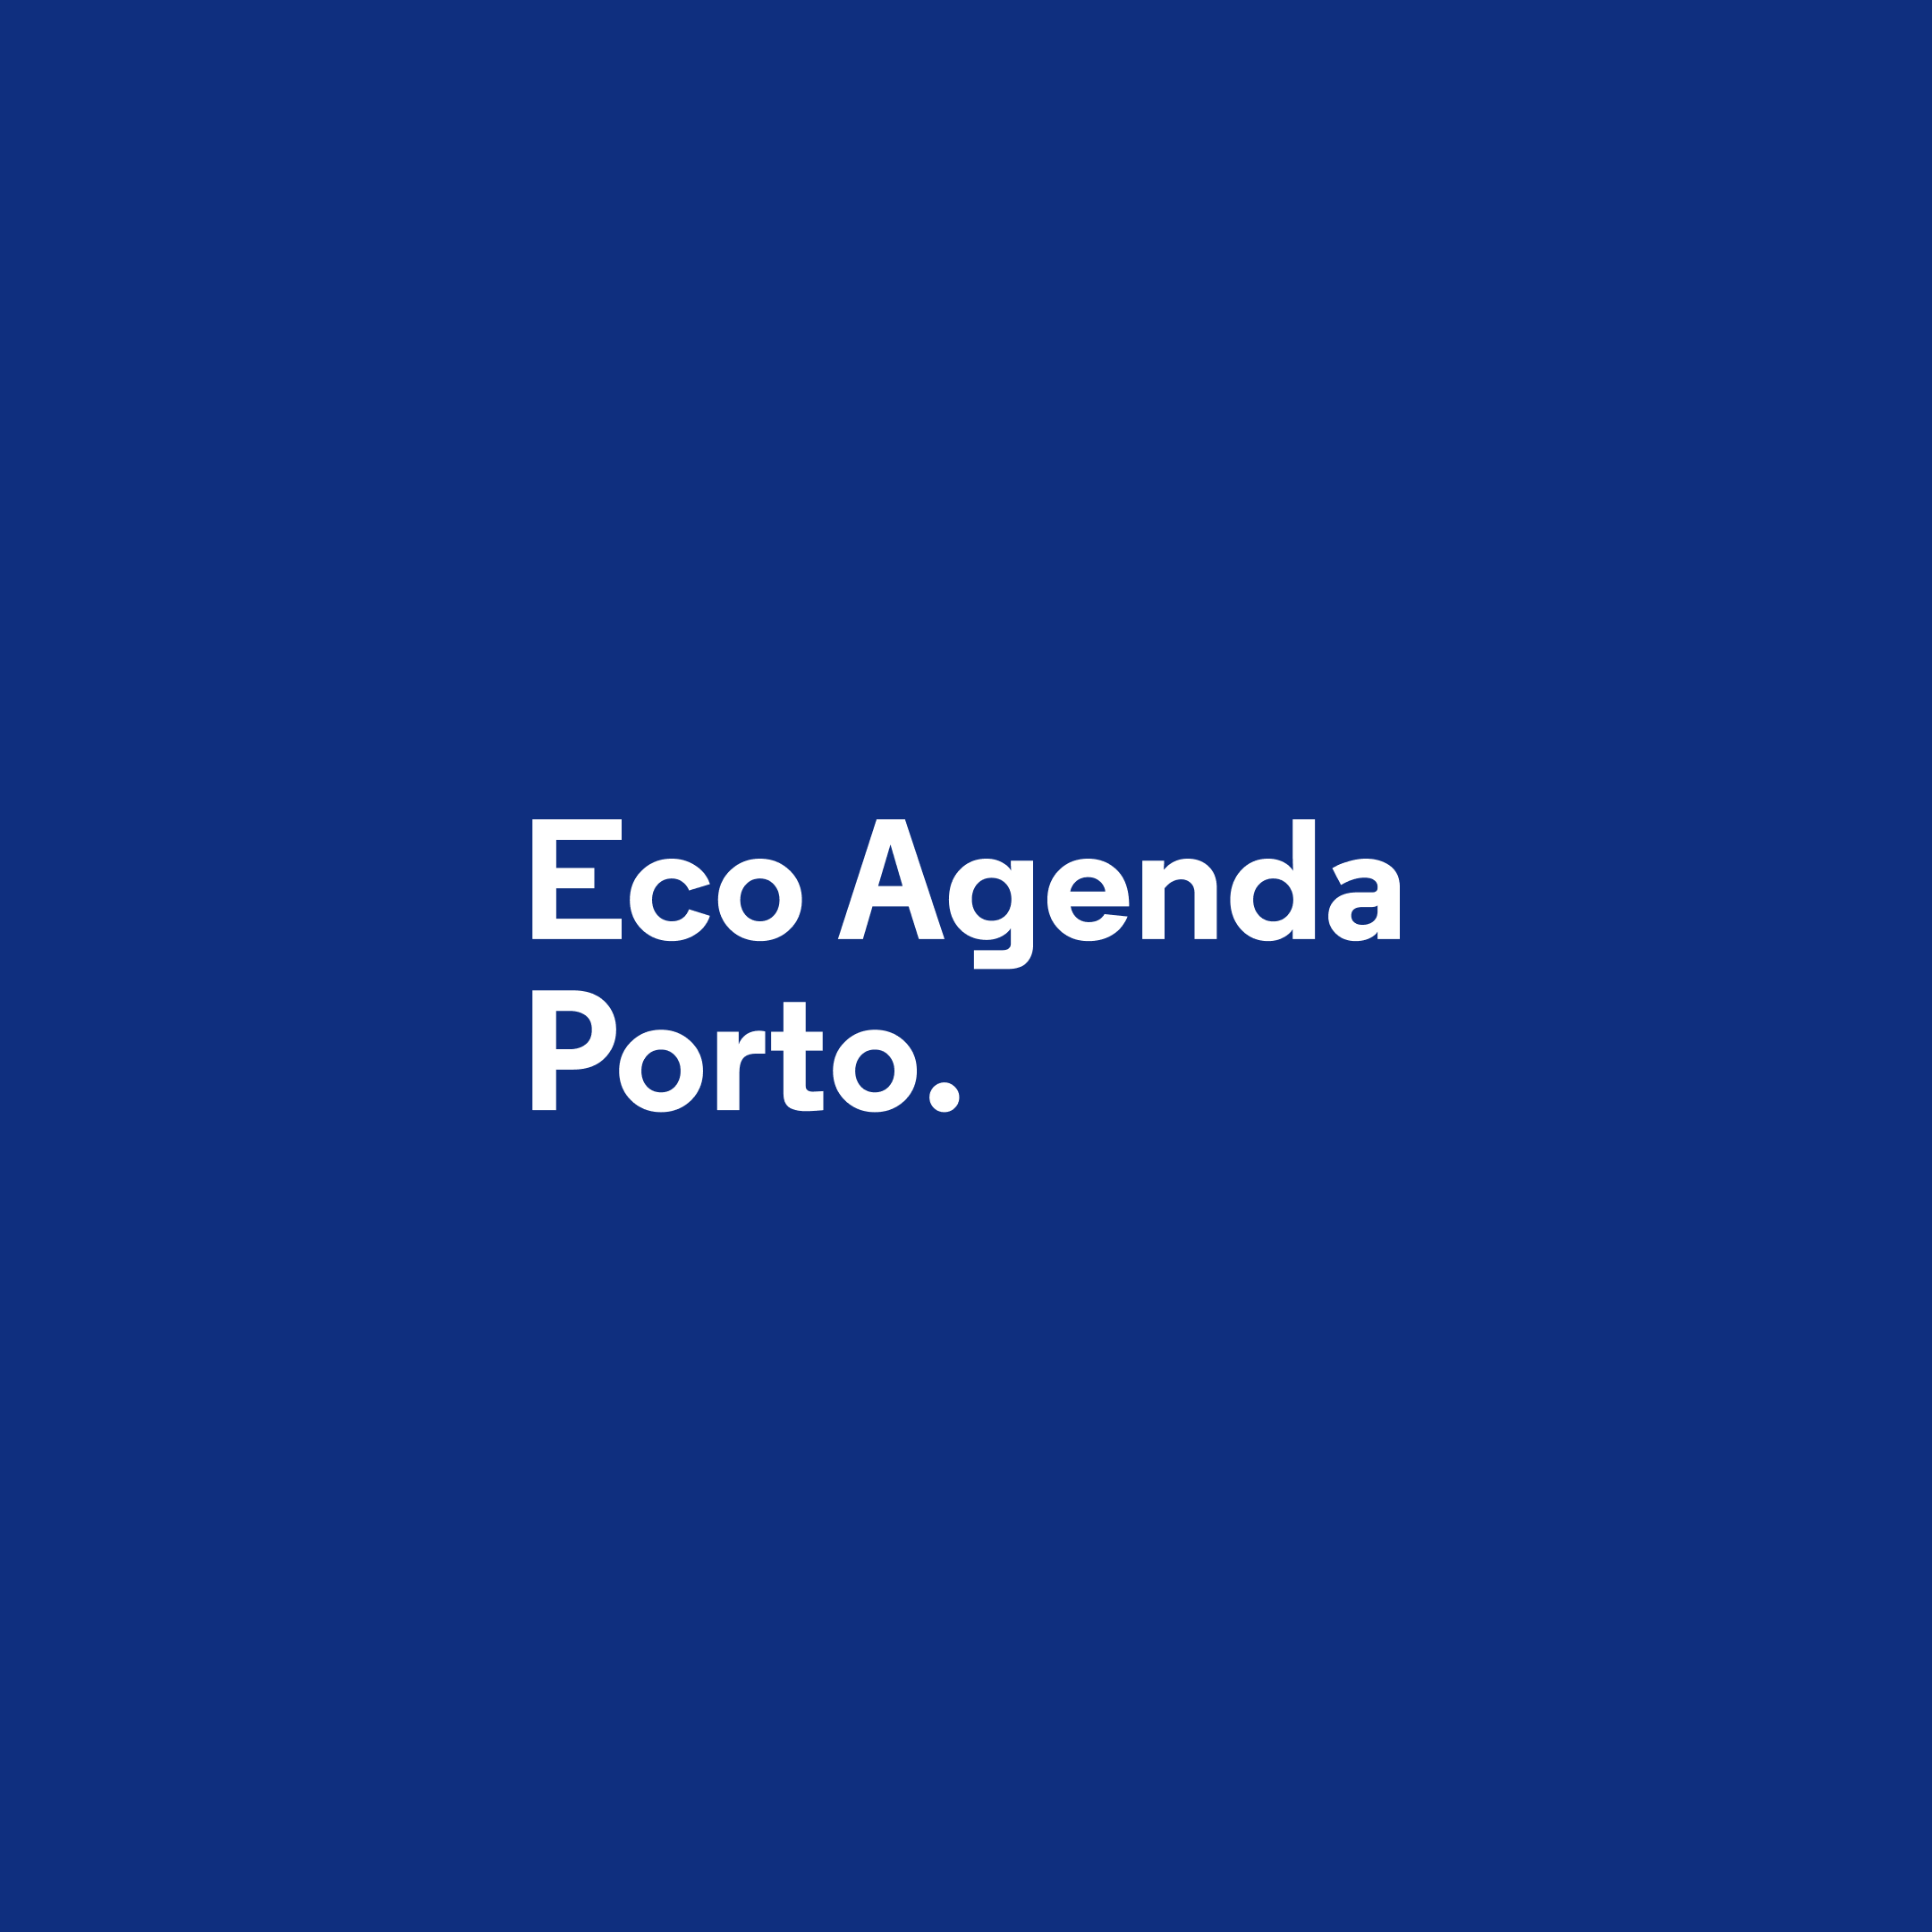 Eco Agenda Porto.